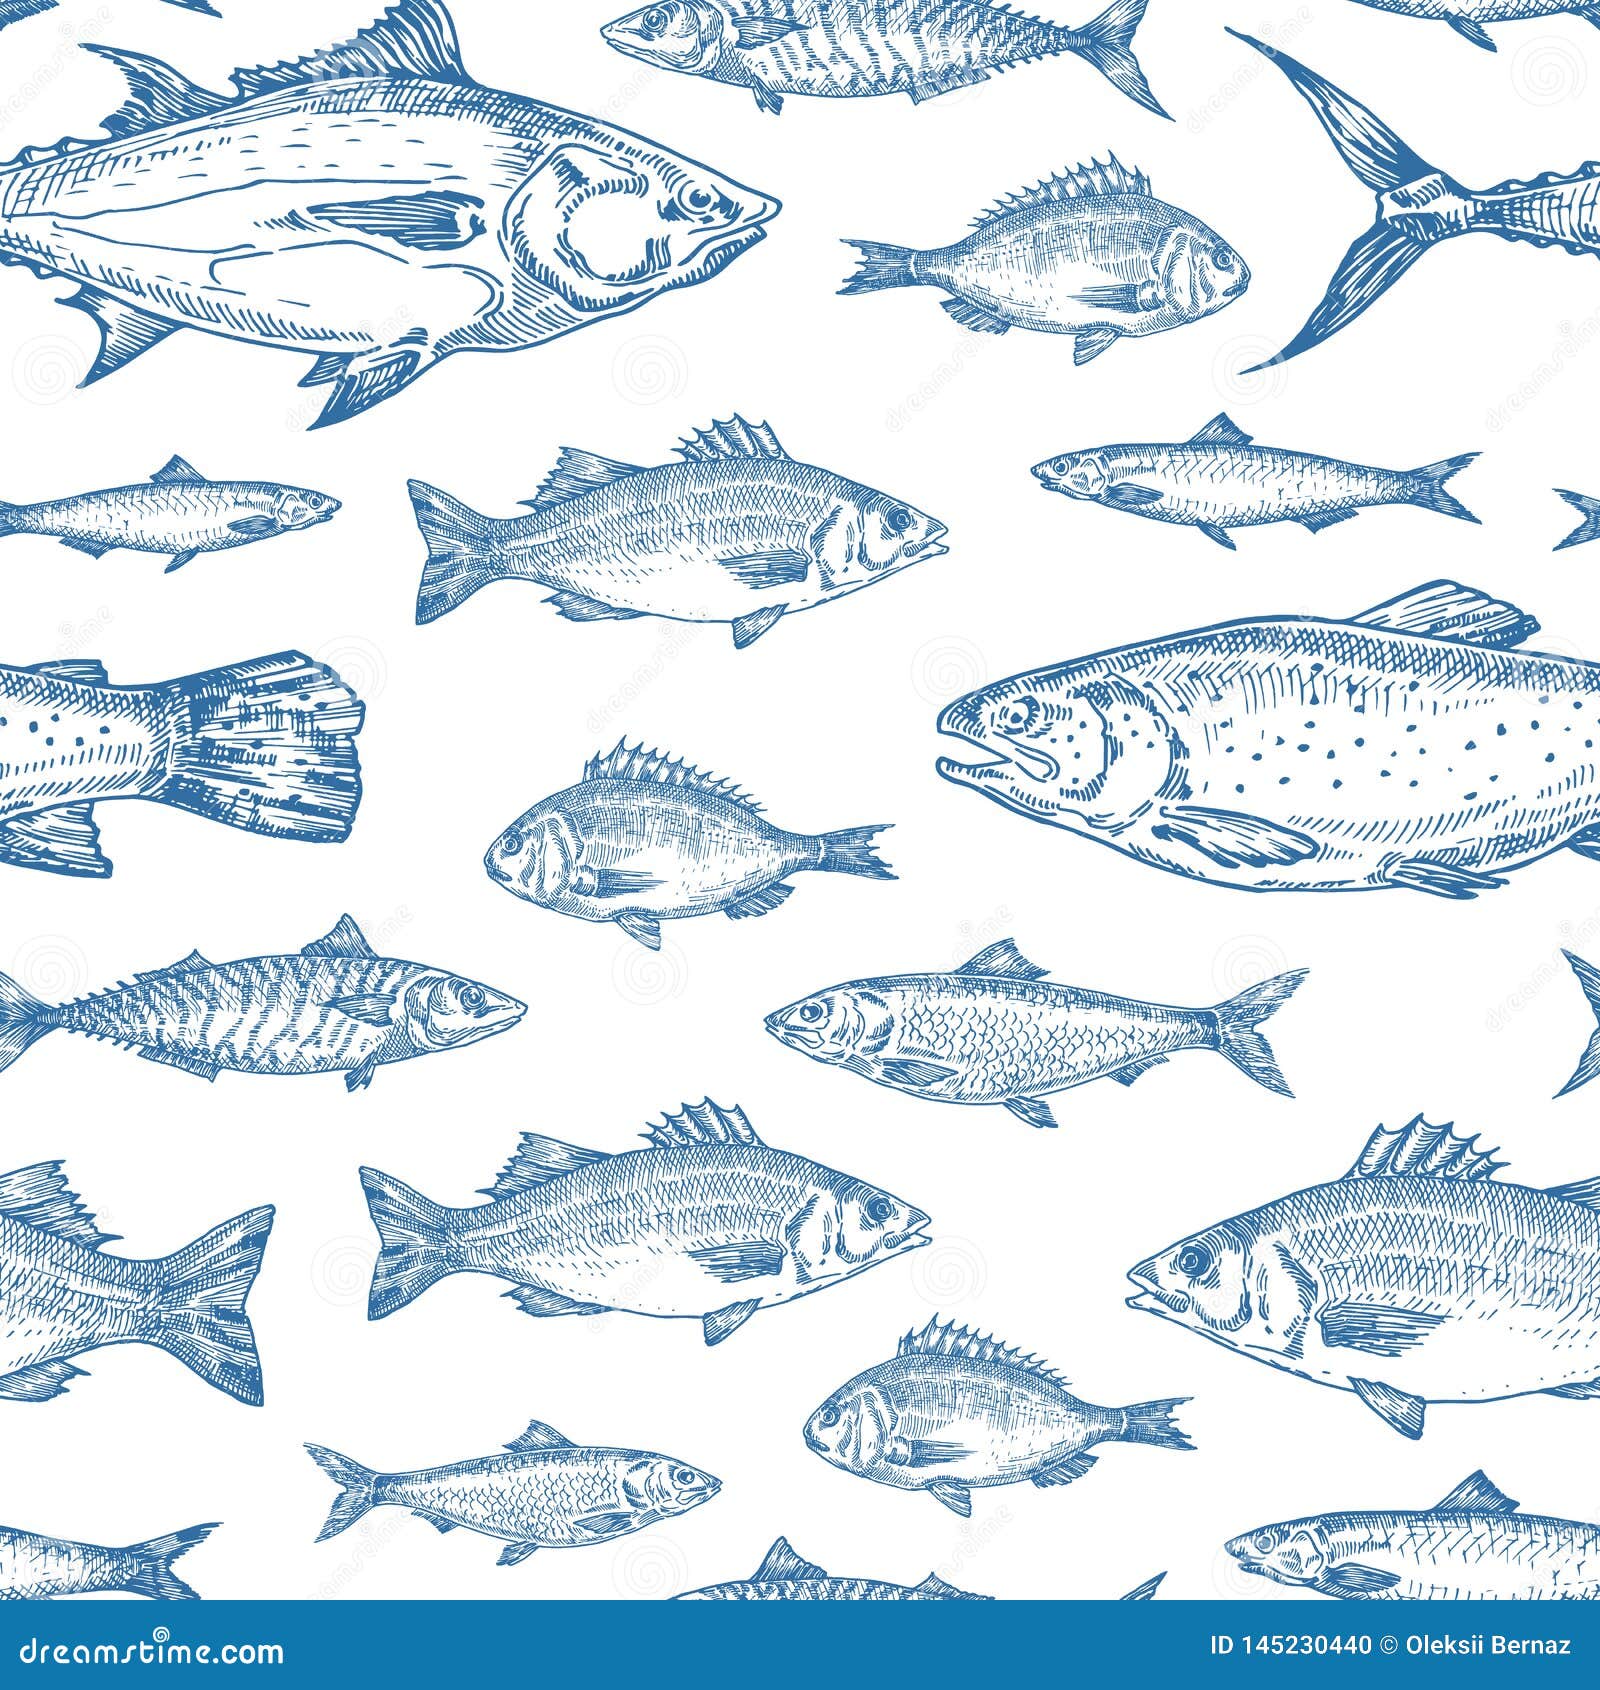 hand drawn ocean fish  seamless background pattern. anchovy, herrings, tuna, dorado, mackerel, seabass and salmons